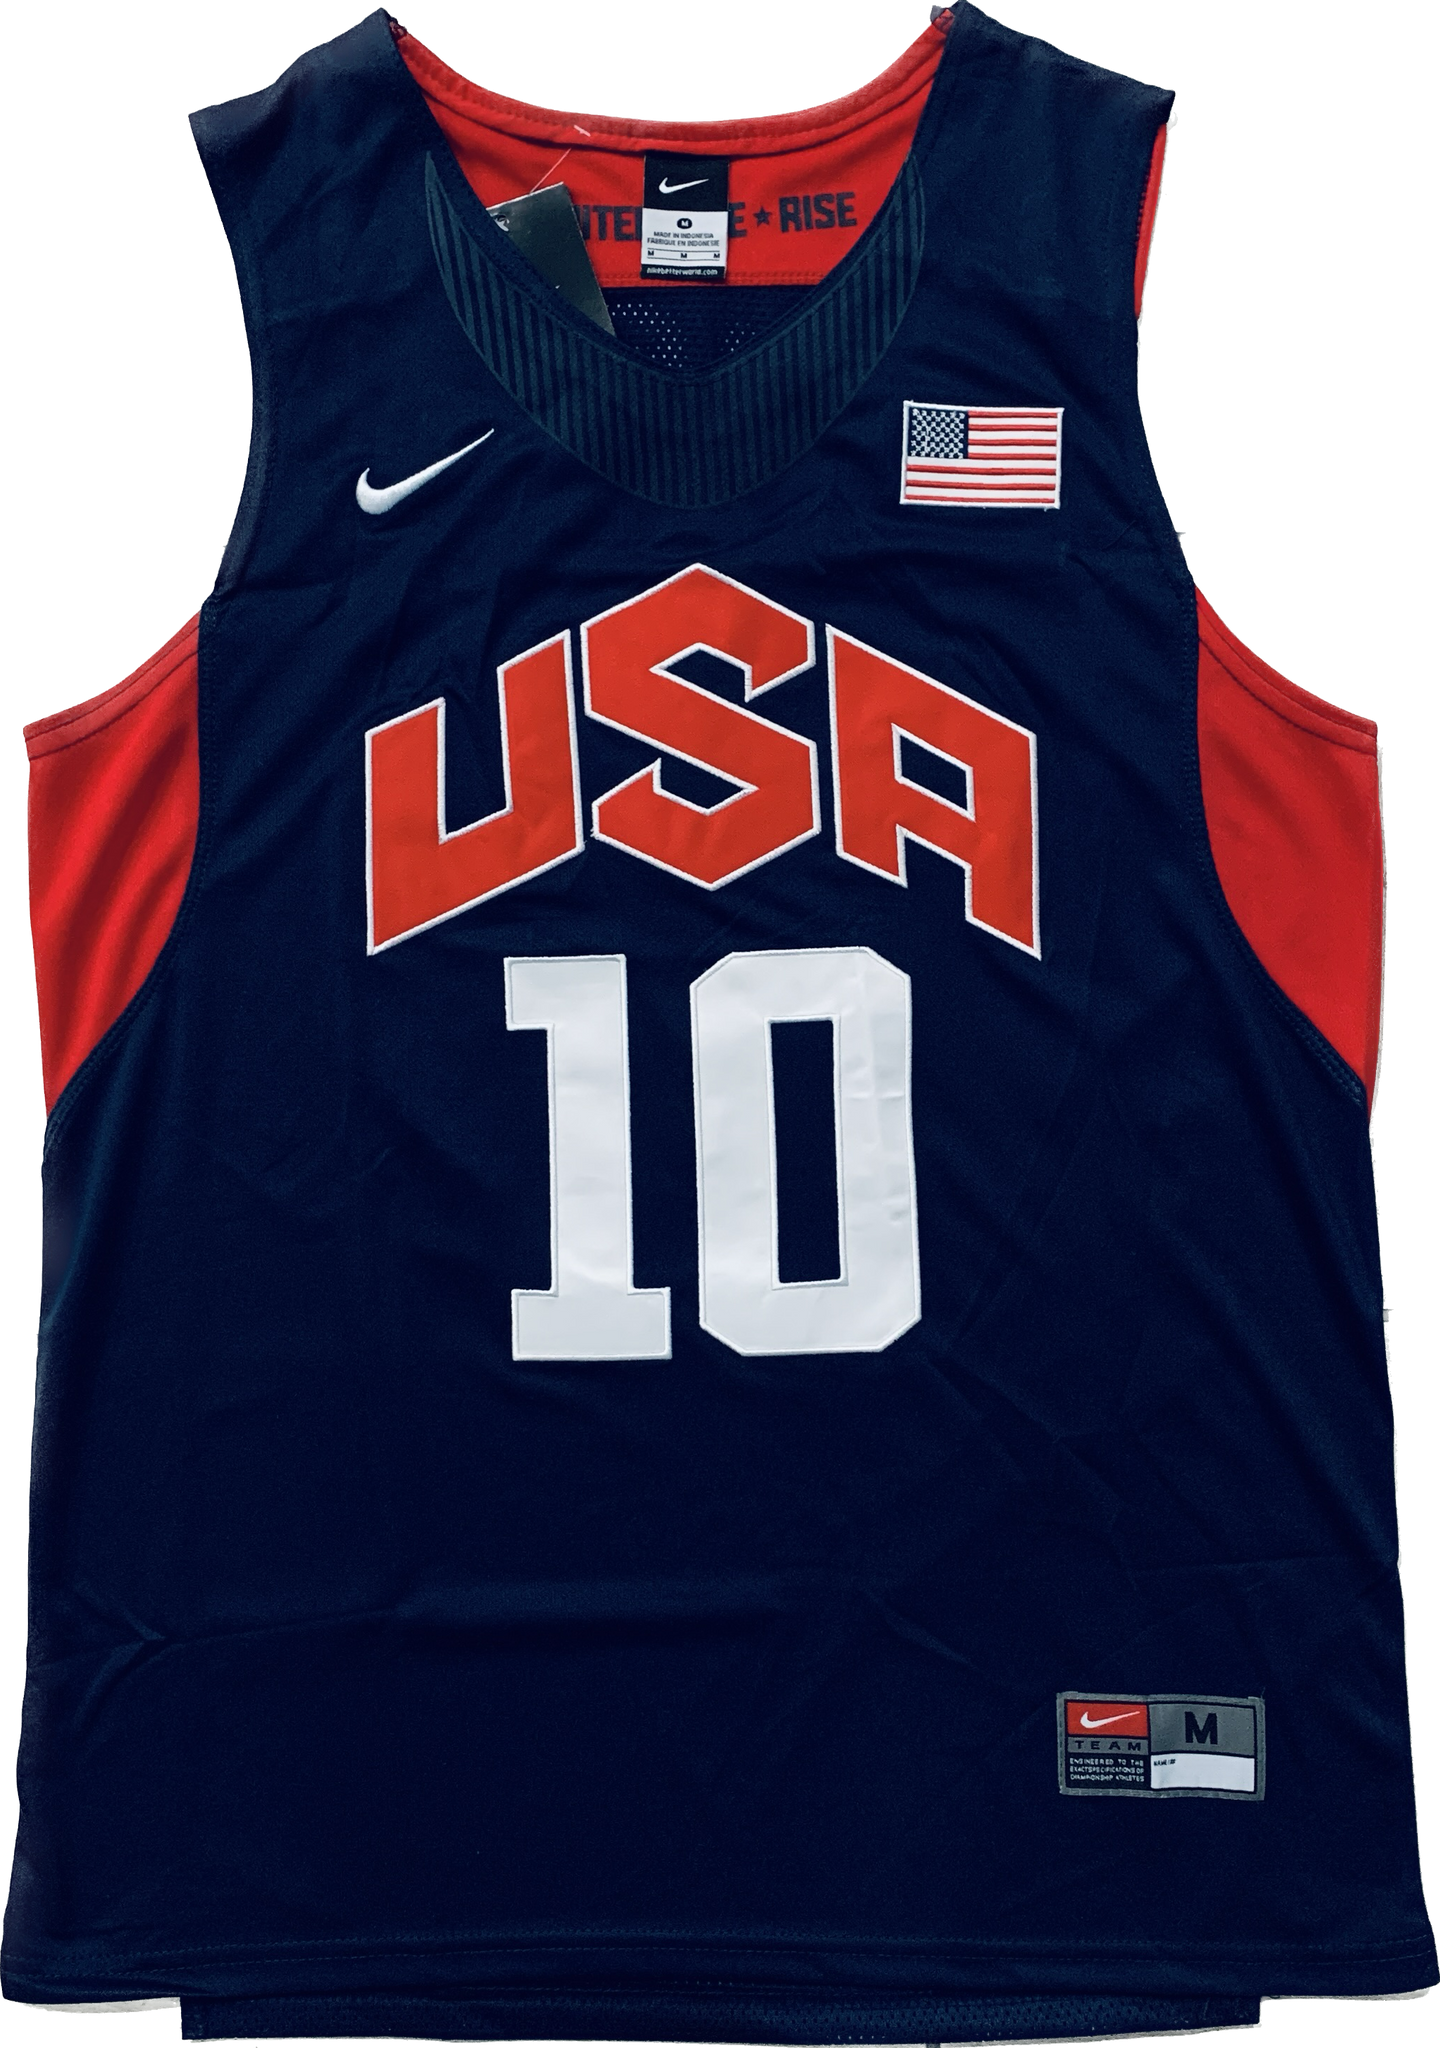 Nike Kobe Bryant Team USA Basketball 2008 Olympics Jersey Size XL